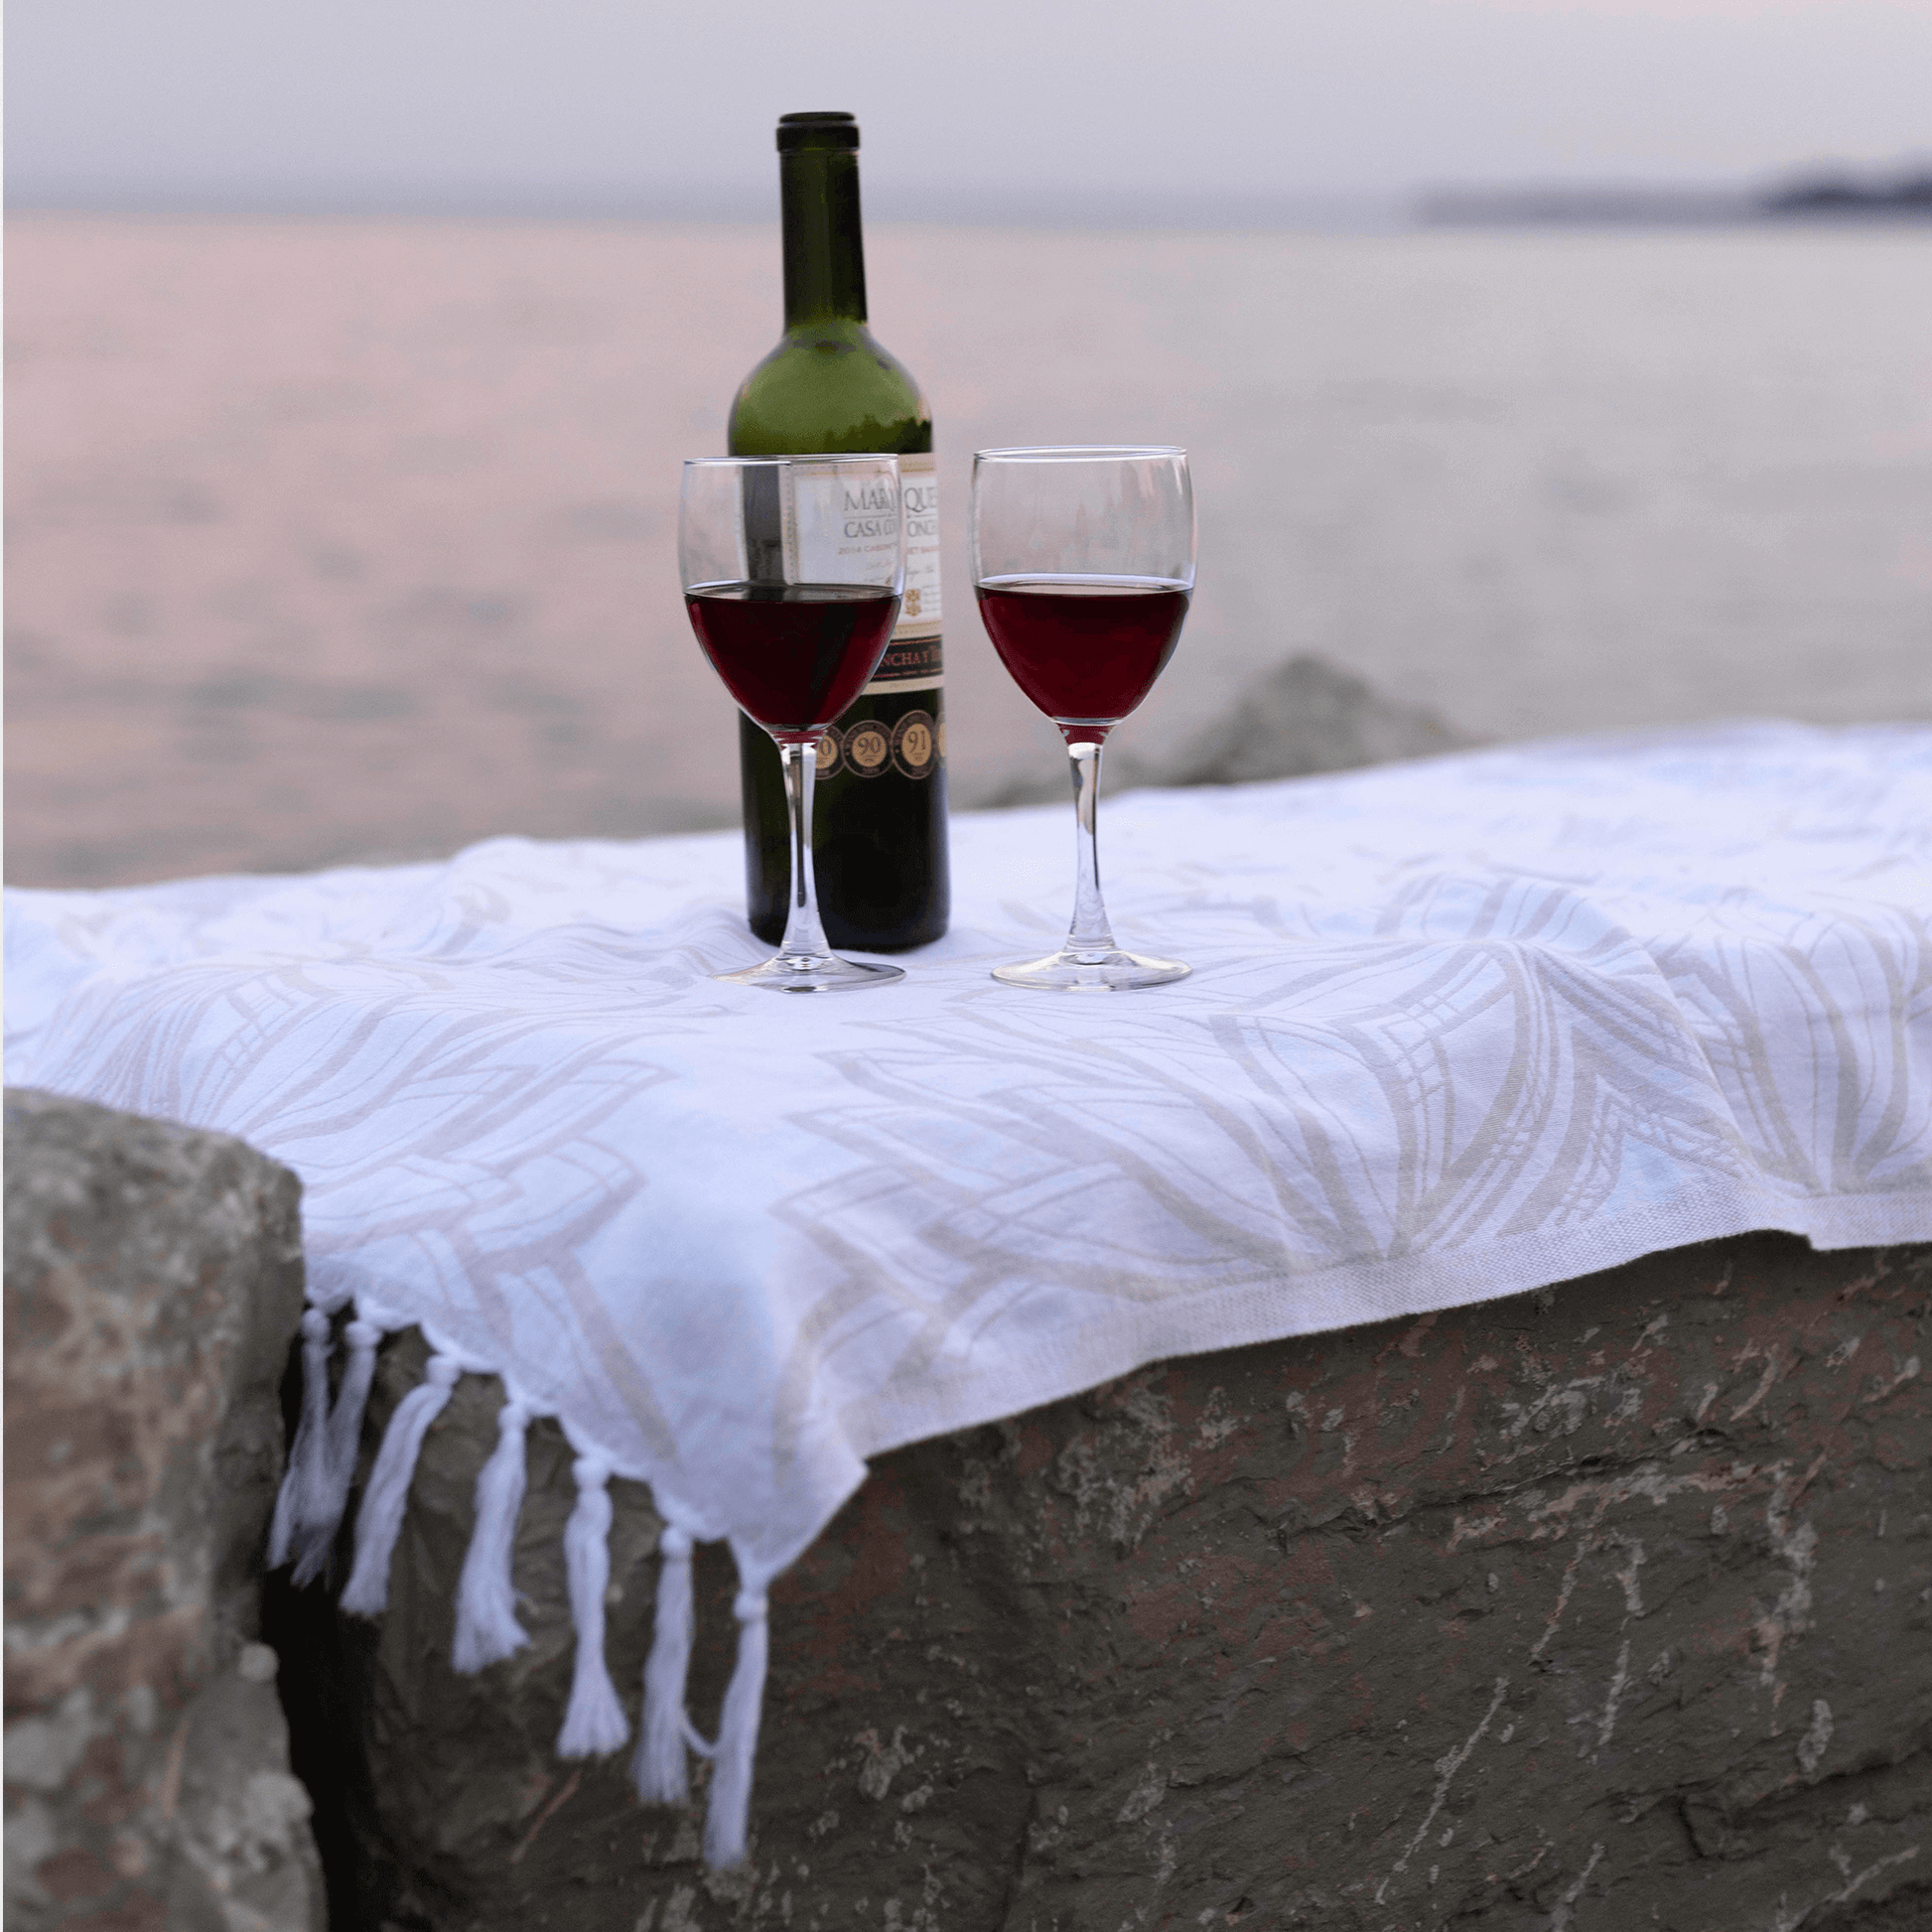 Turkish towel near the lake with wine